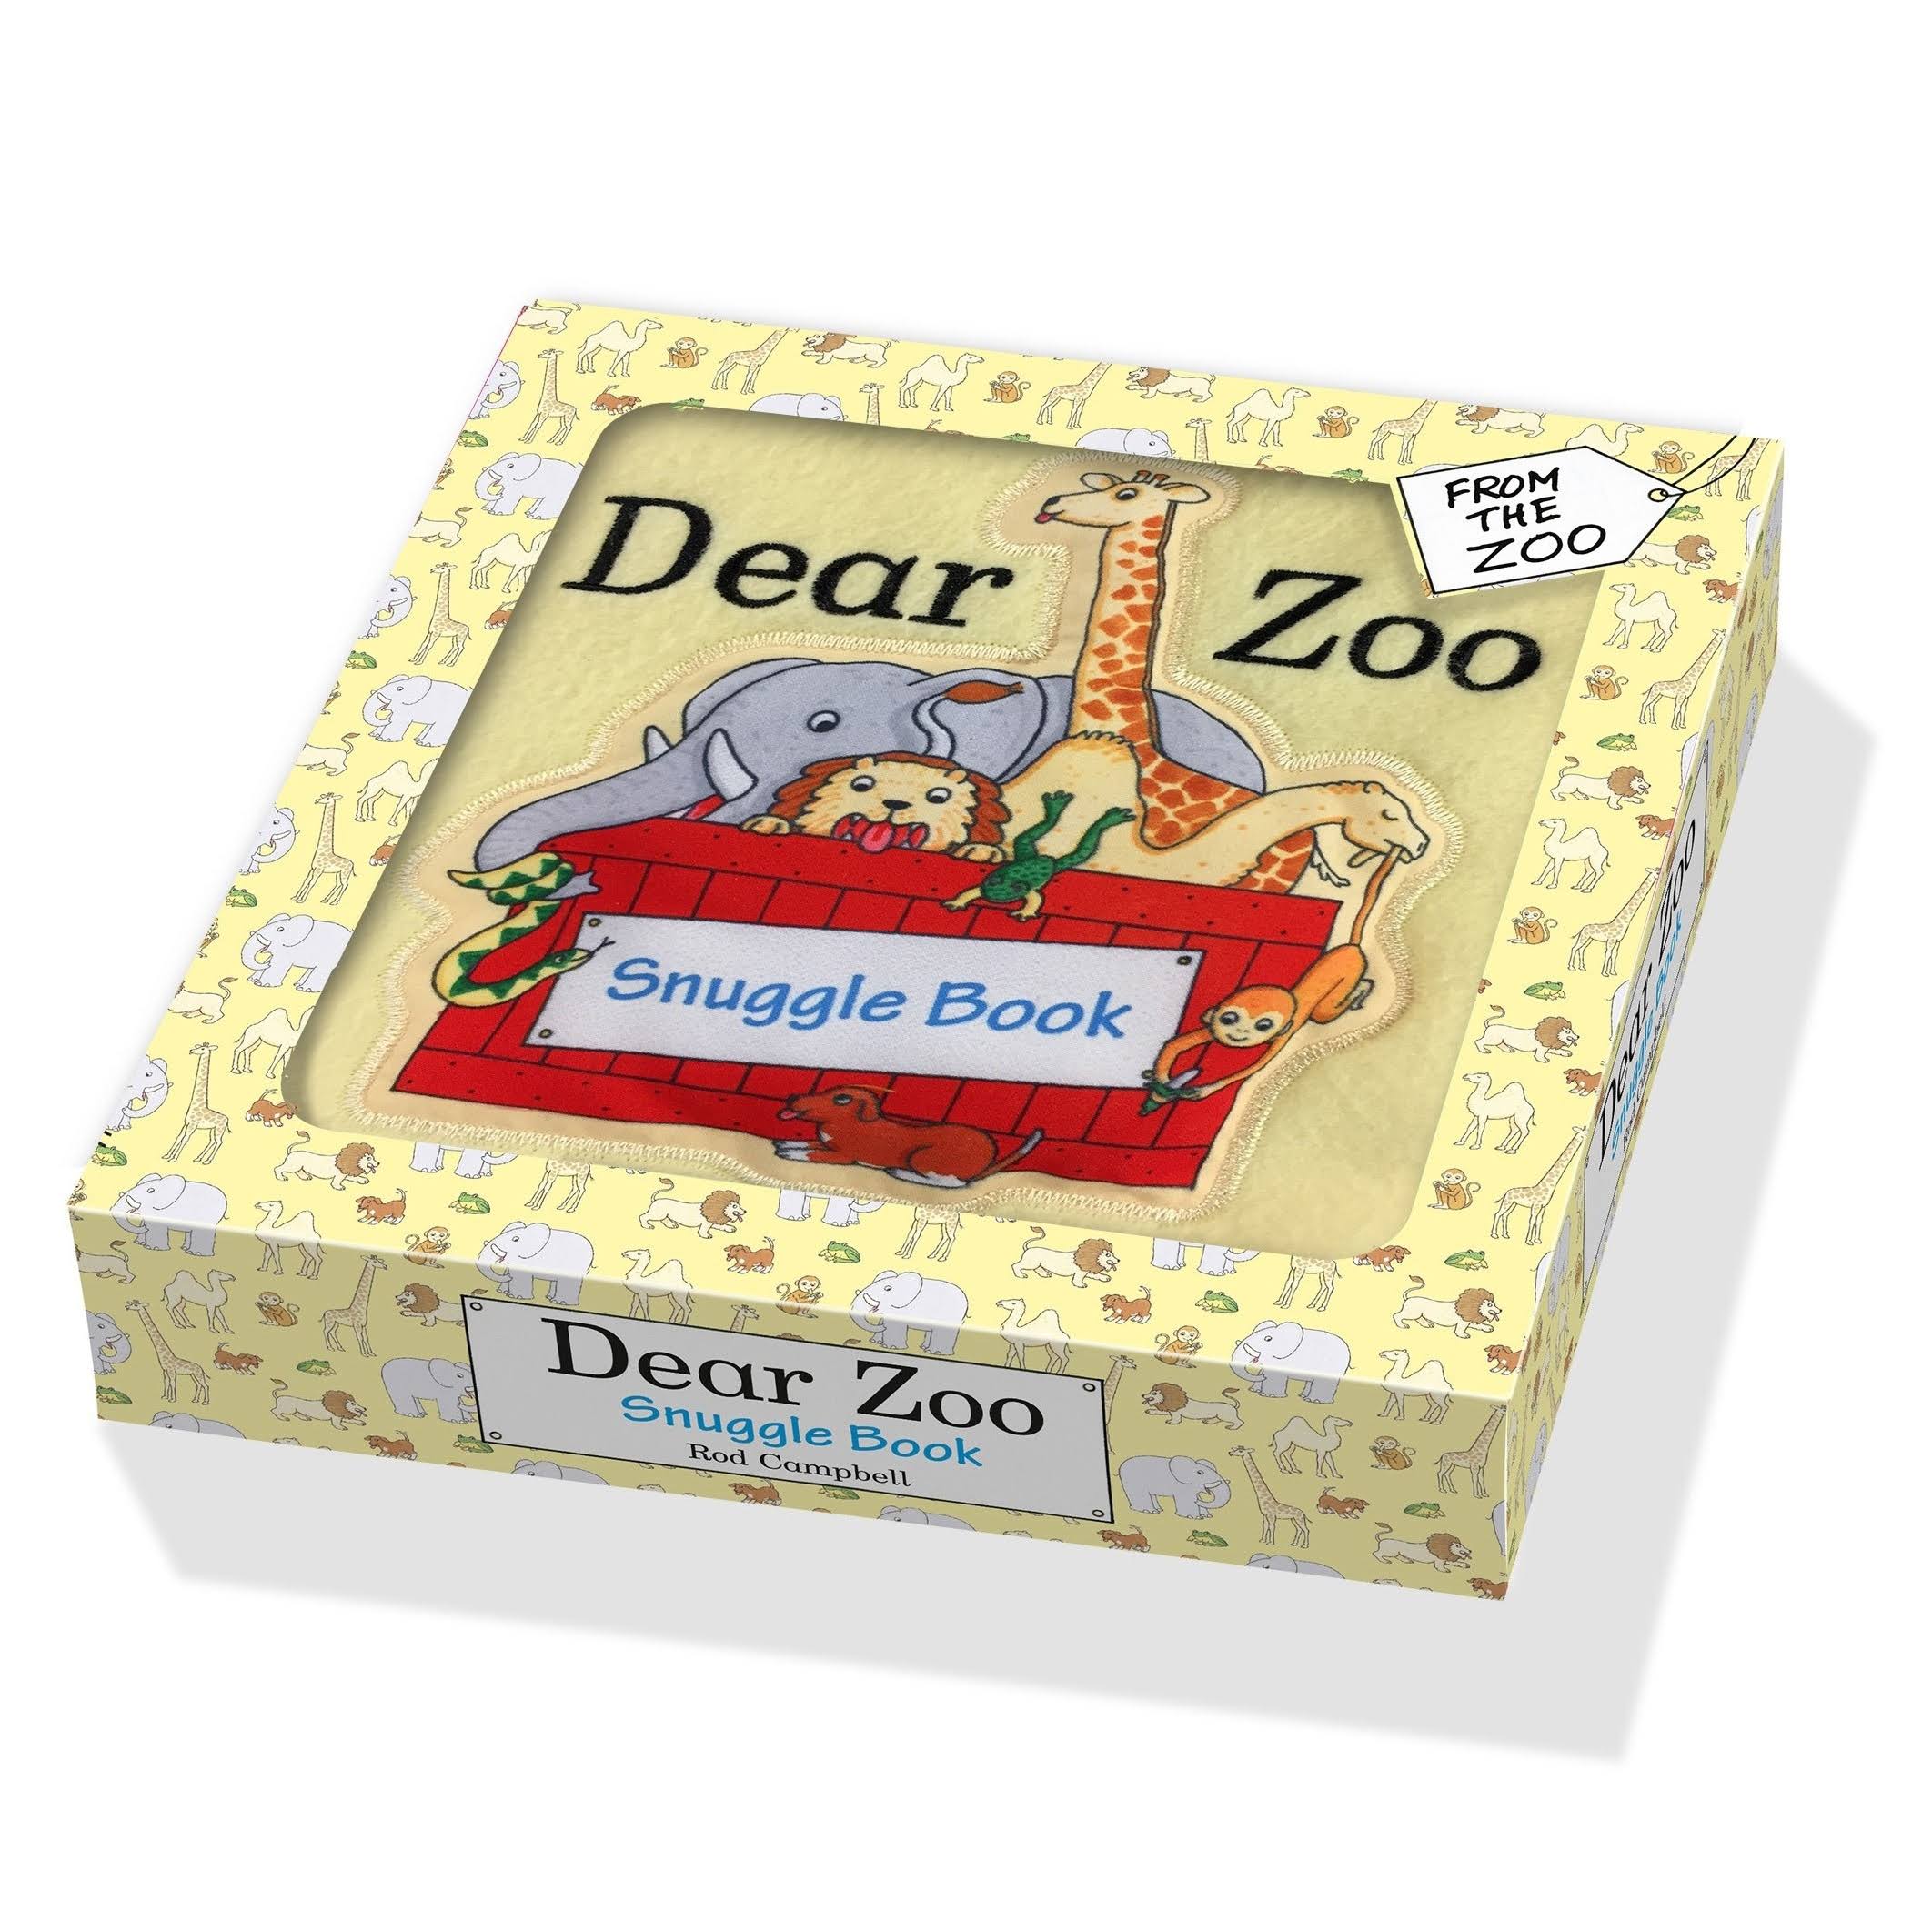 Dear Zoo Snuggle Book - Rod Campbell